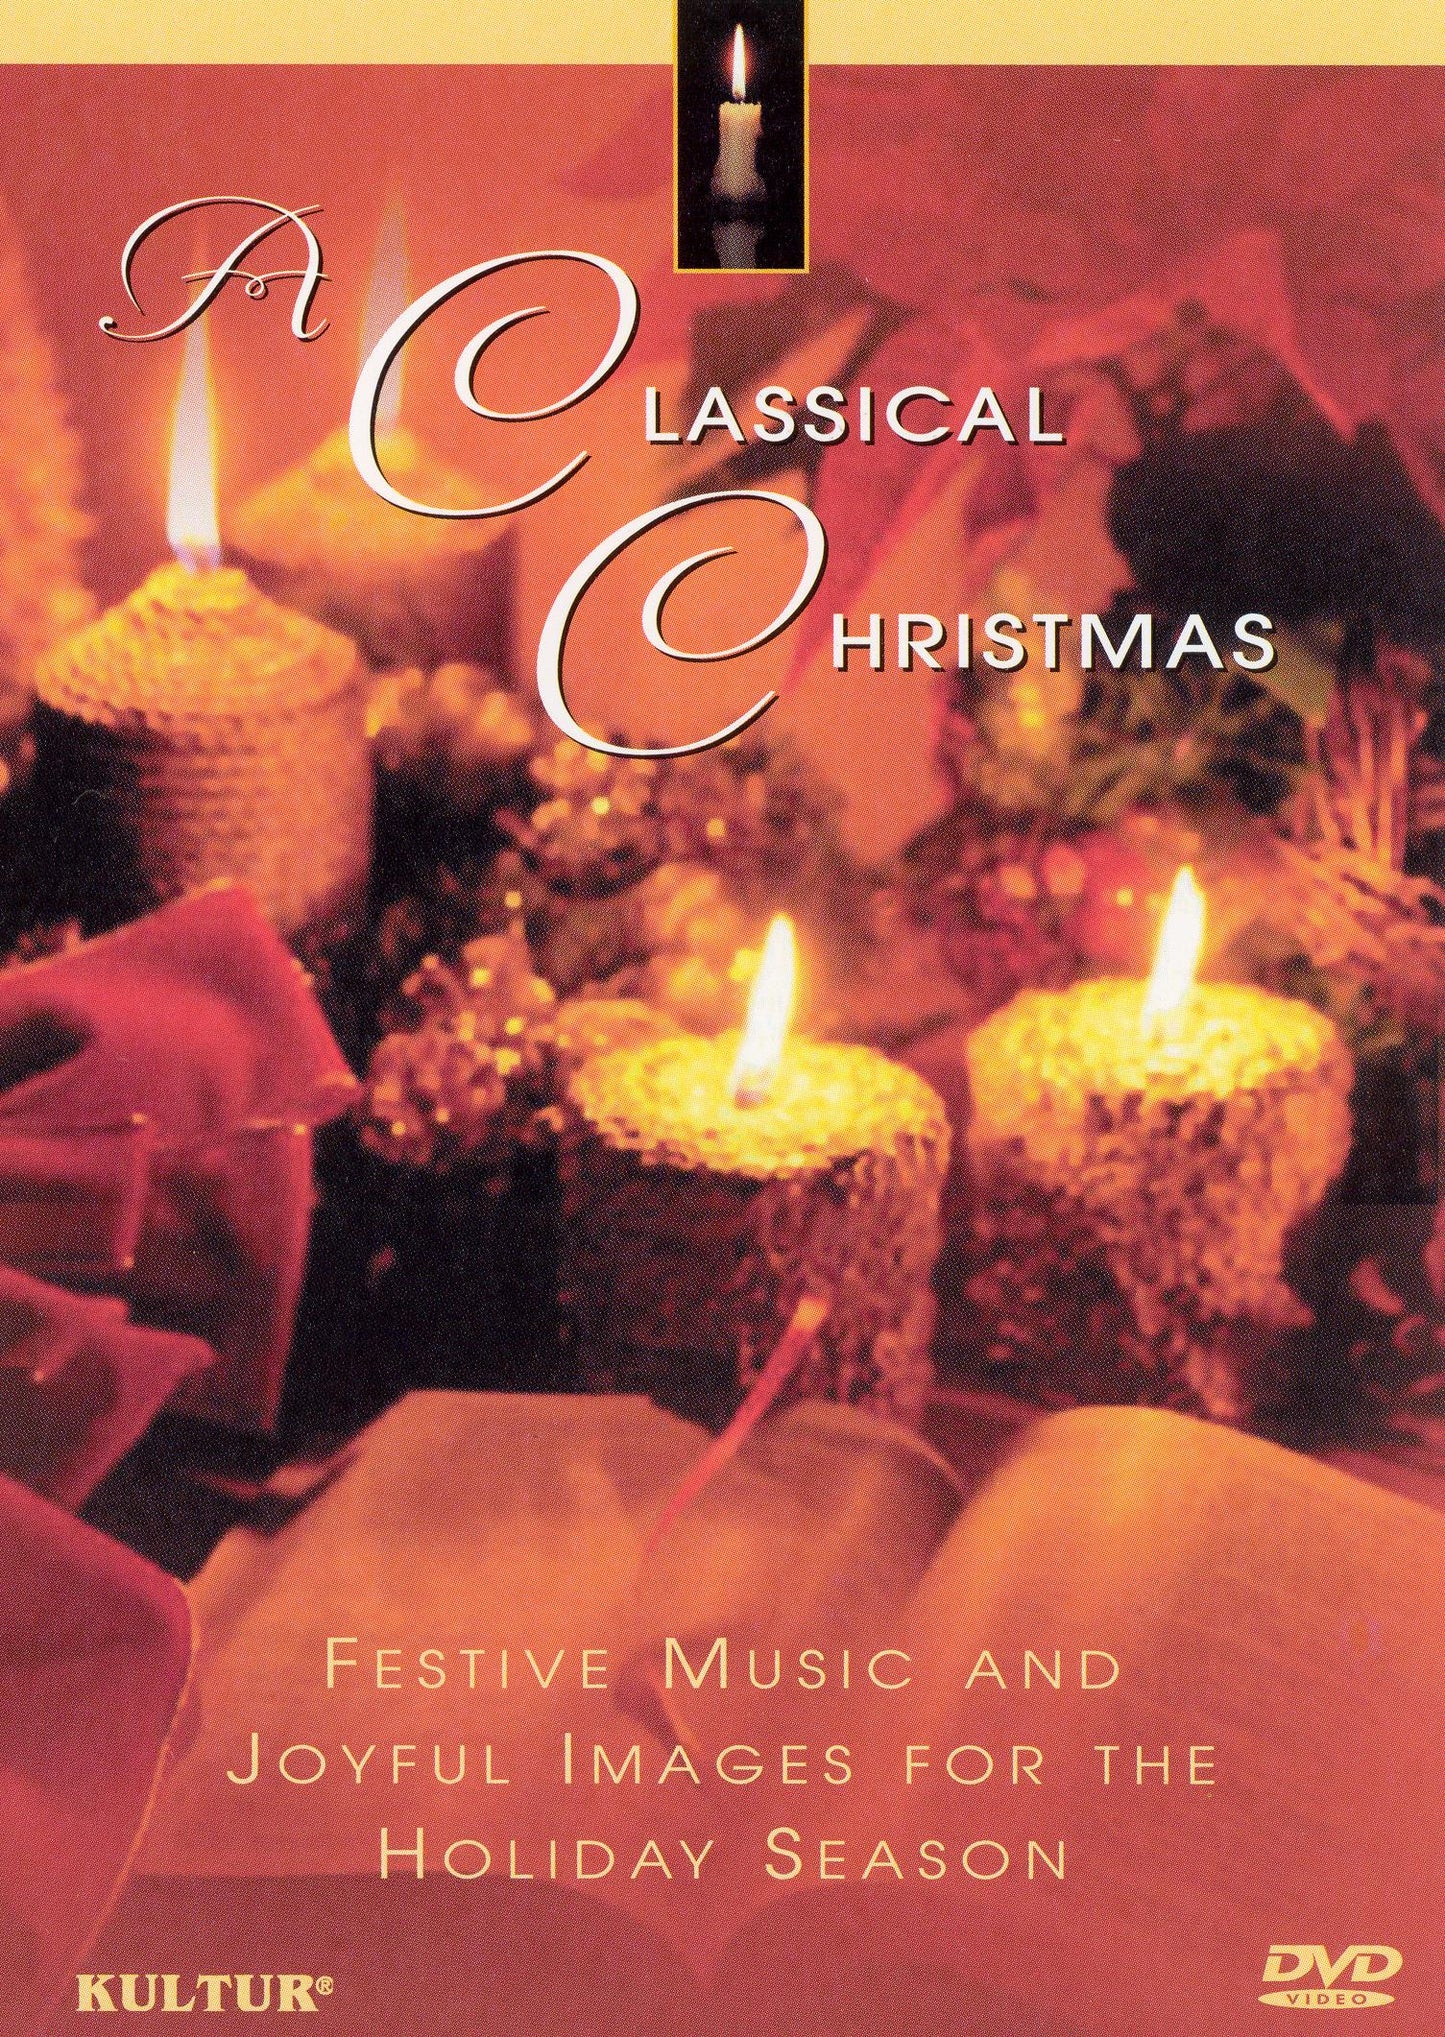 Classical Christmas cover art